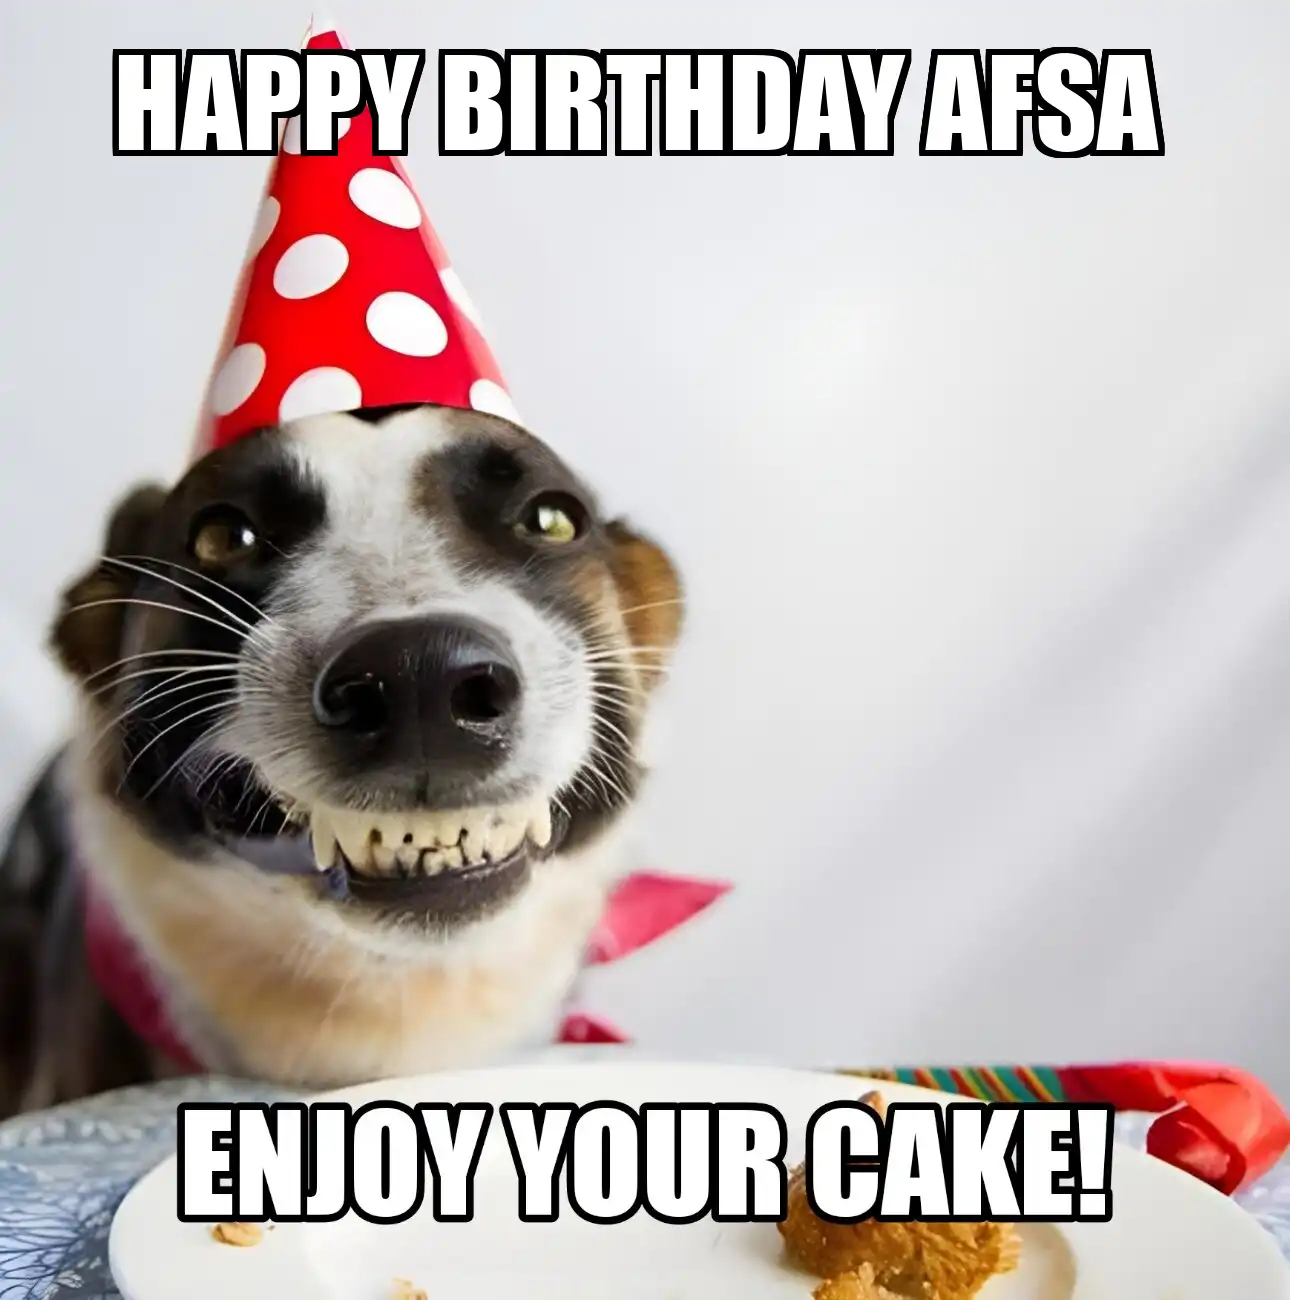 Happy Birthday Afsa Enjoy Your Cake Dog Meme